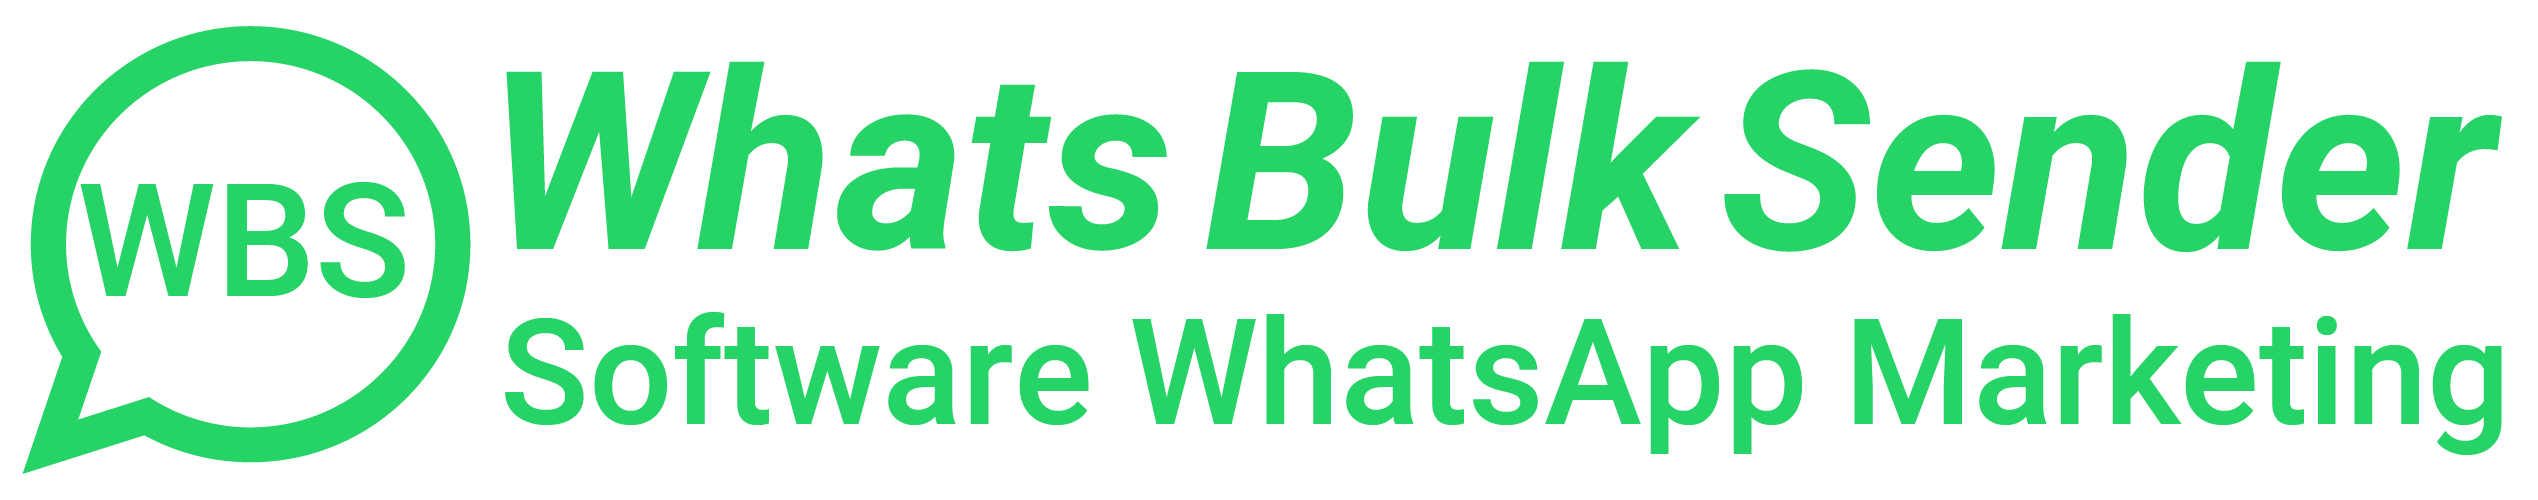 Whats Bulk Sender | Software WhatsApp Marketing